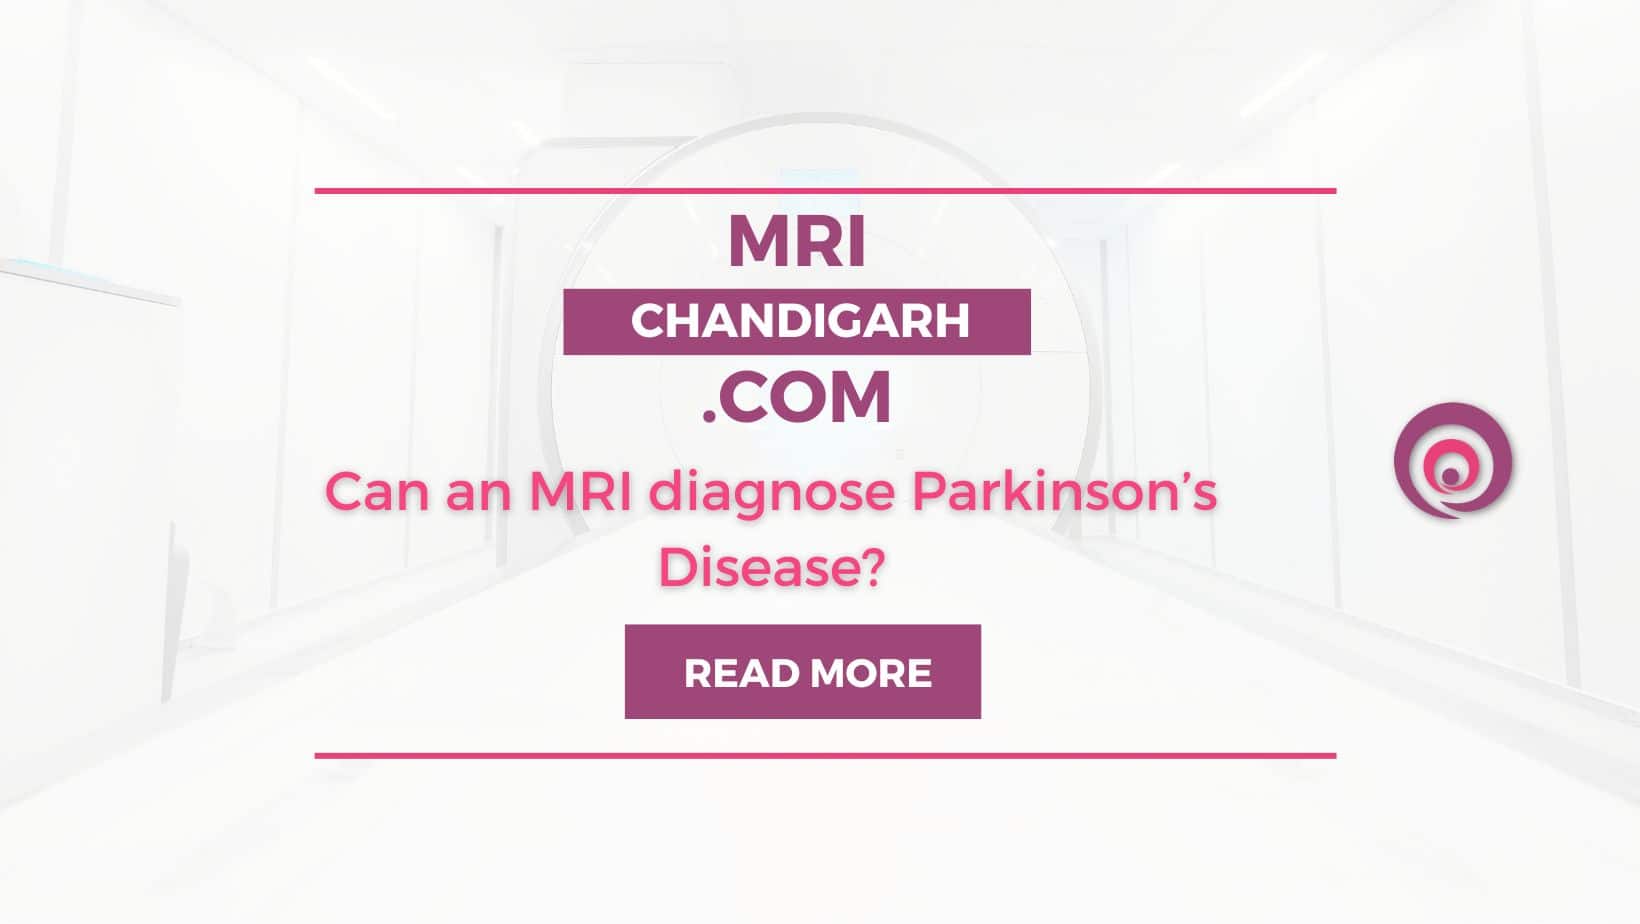 Can an MRI diagnose Parkinson’s Disease?